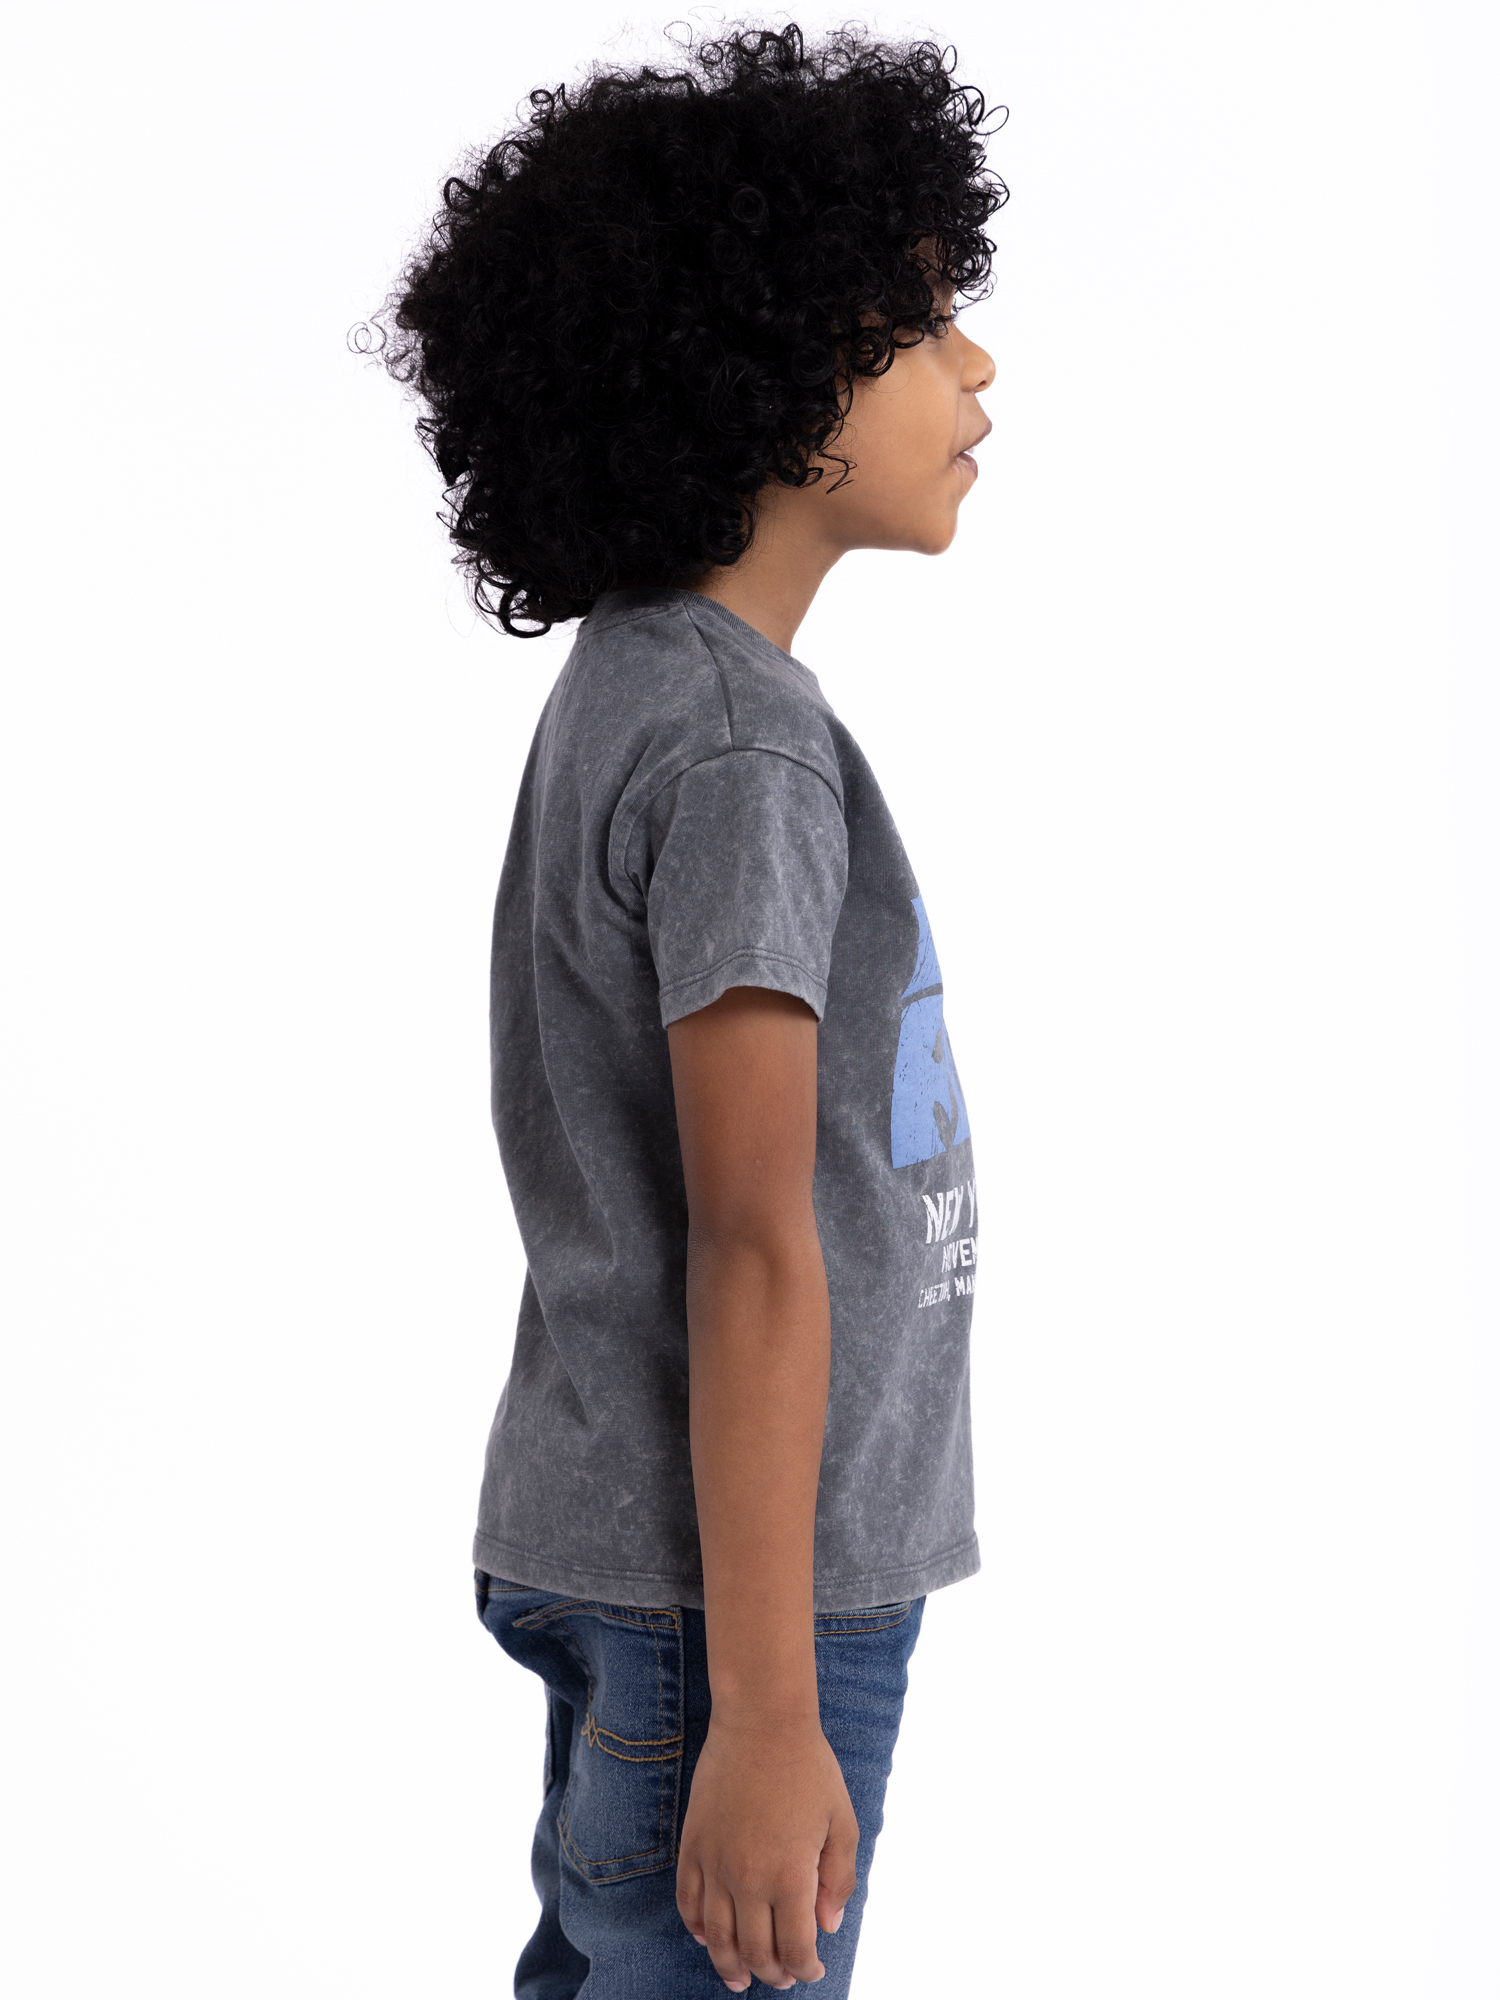 Pink Floyd Toddler Boys or Girls Short Sleeve Crewneck T-Shirt, Sizes 12M-5T - image 2 of 6